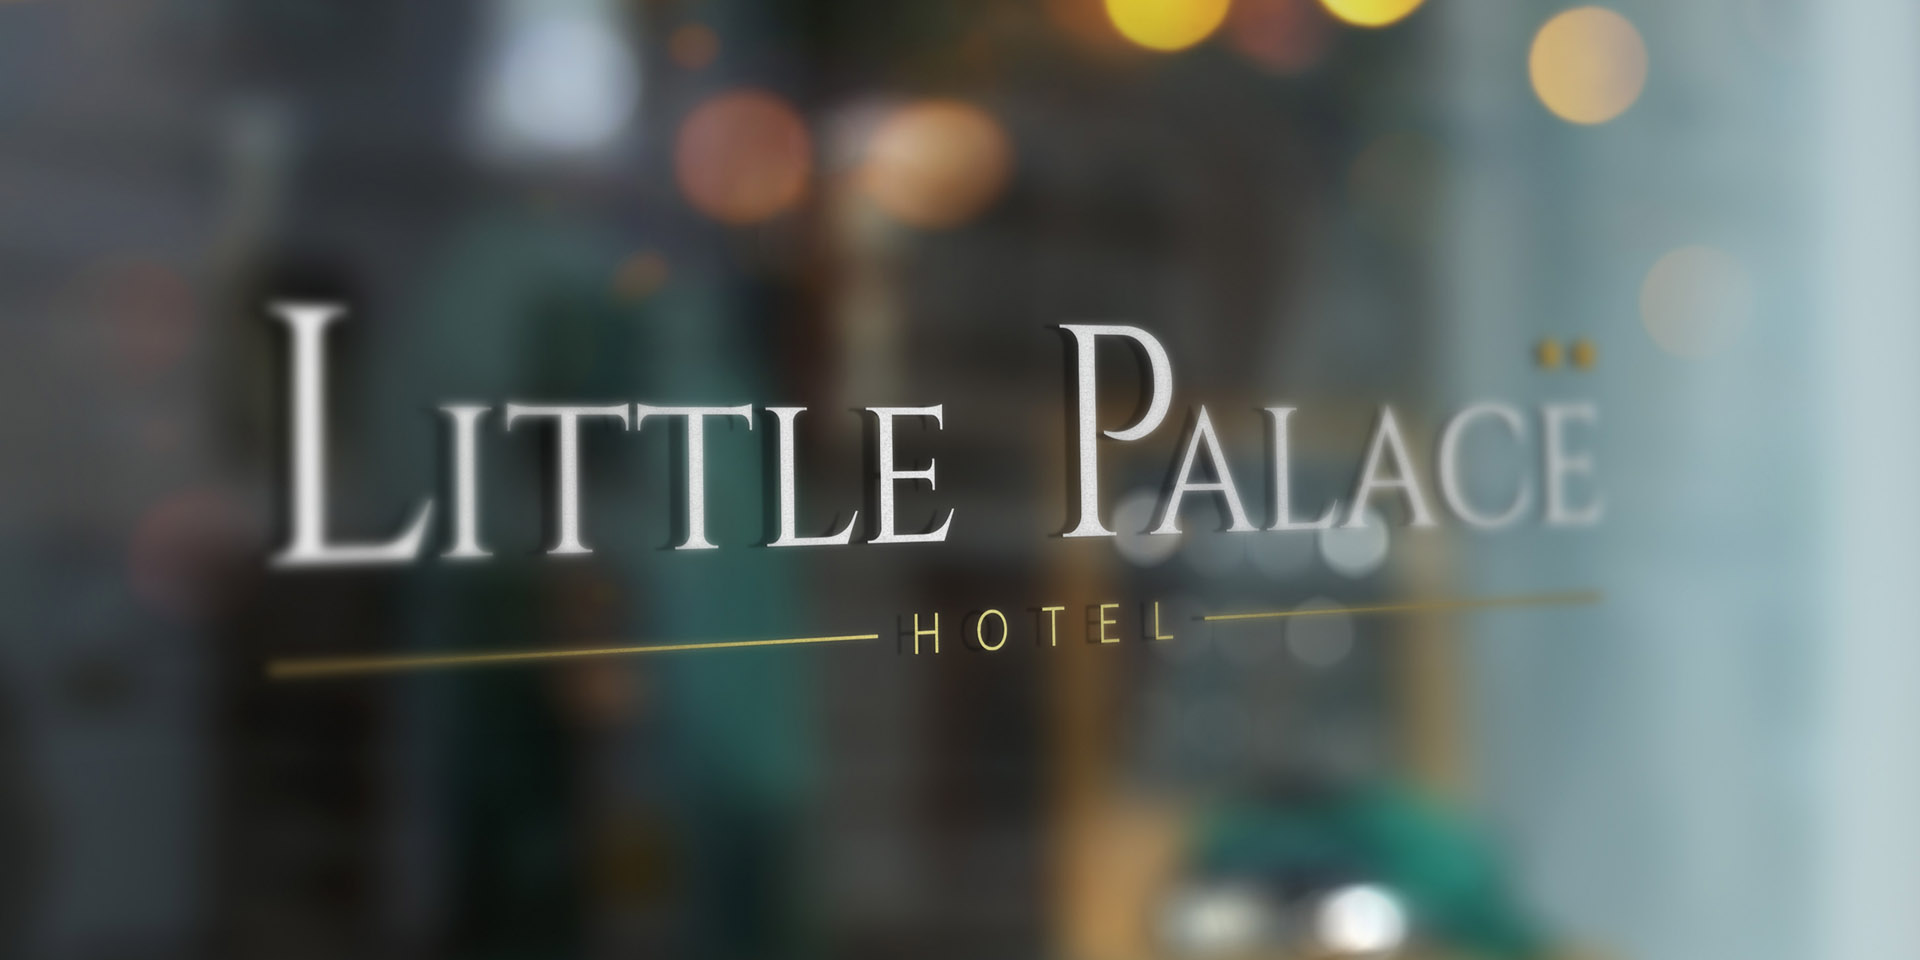 Little Palace Hotel